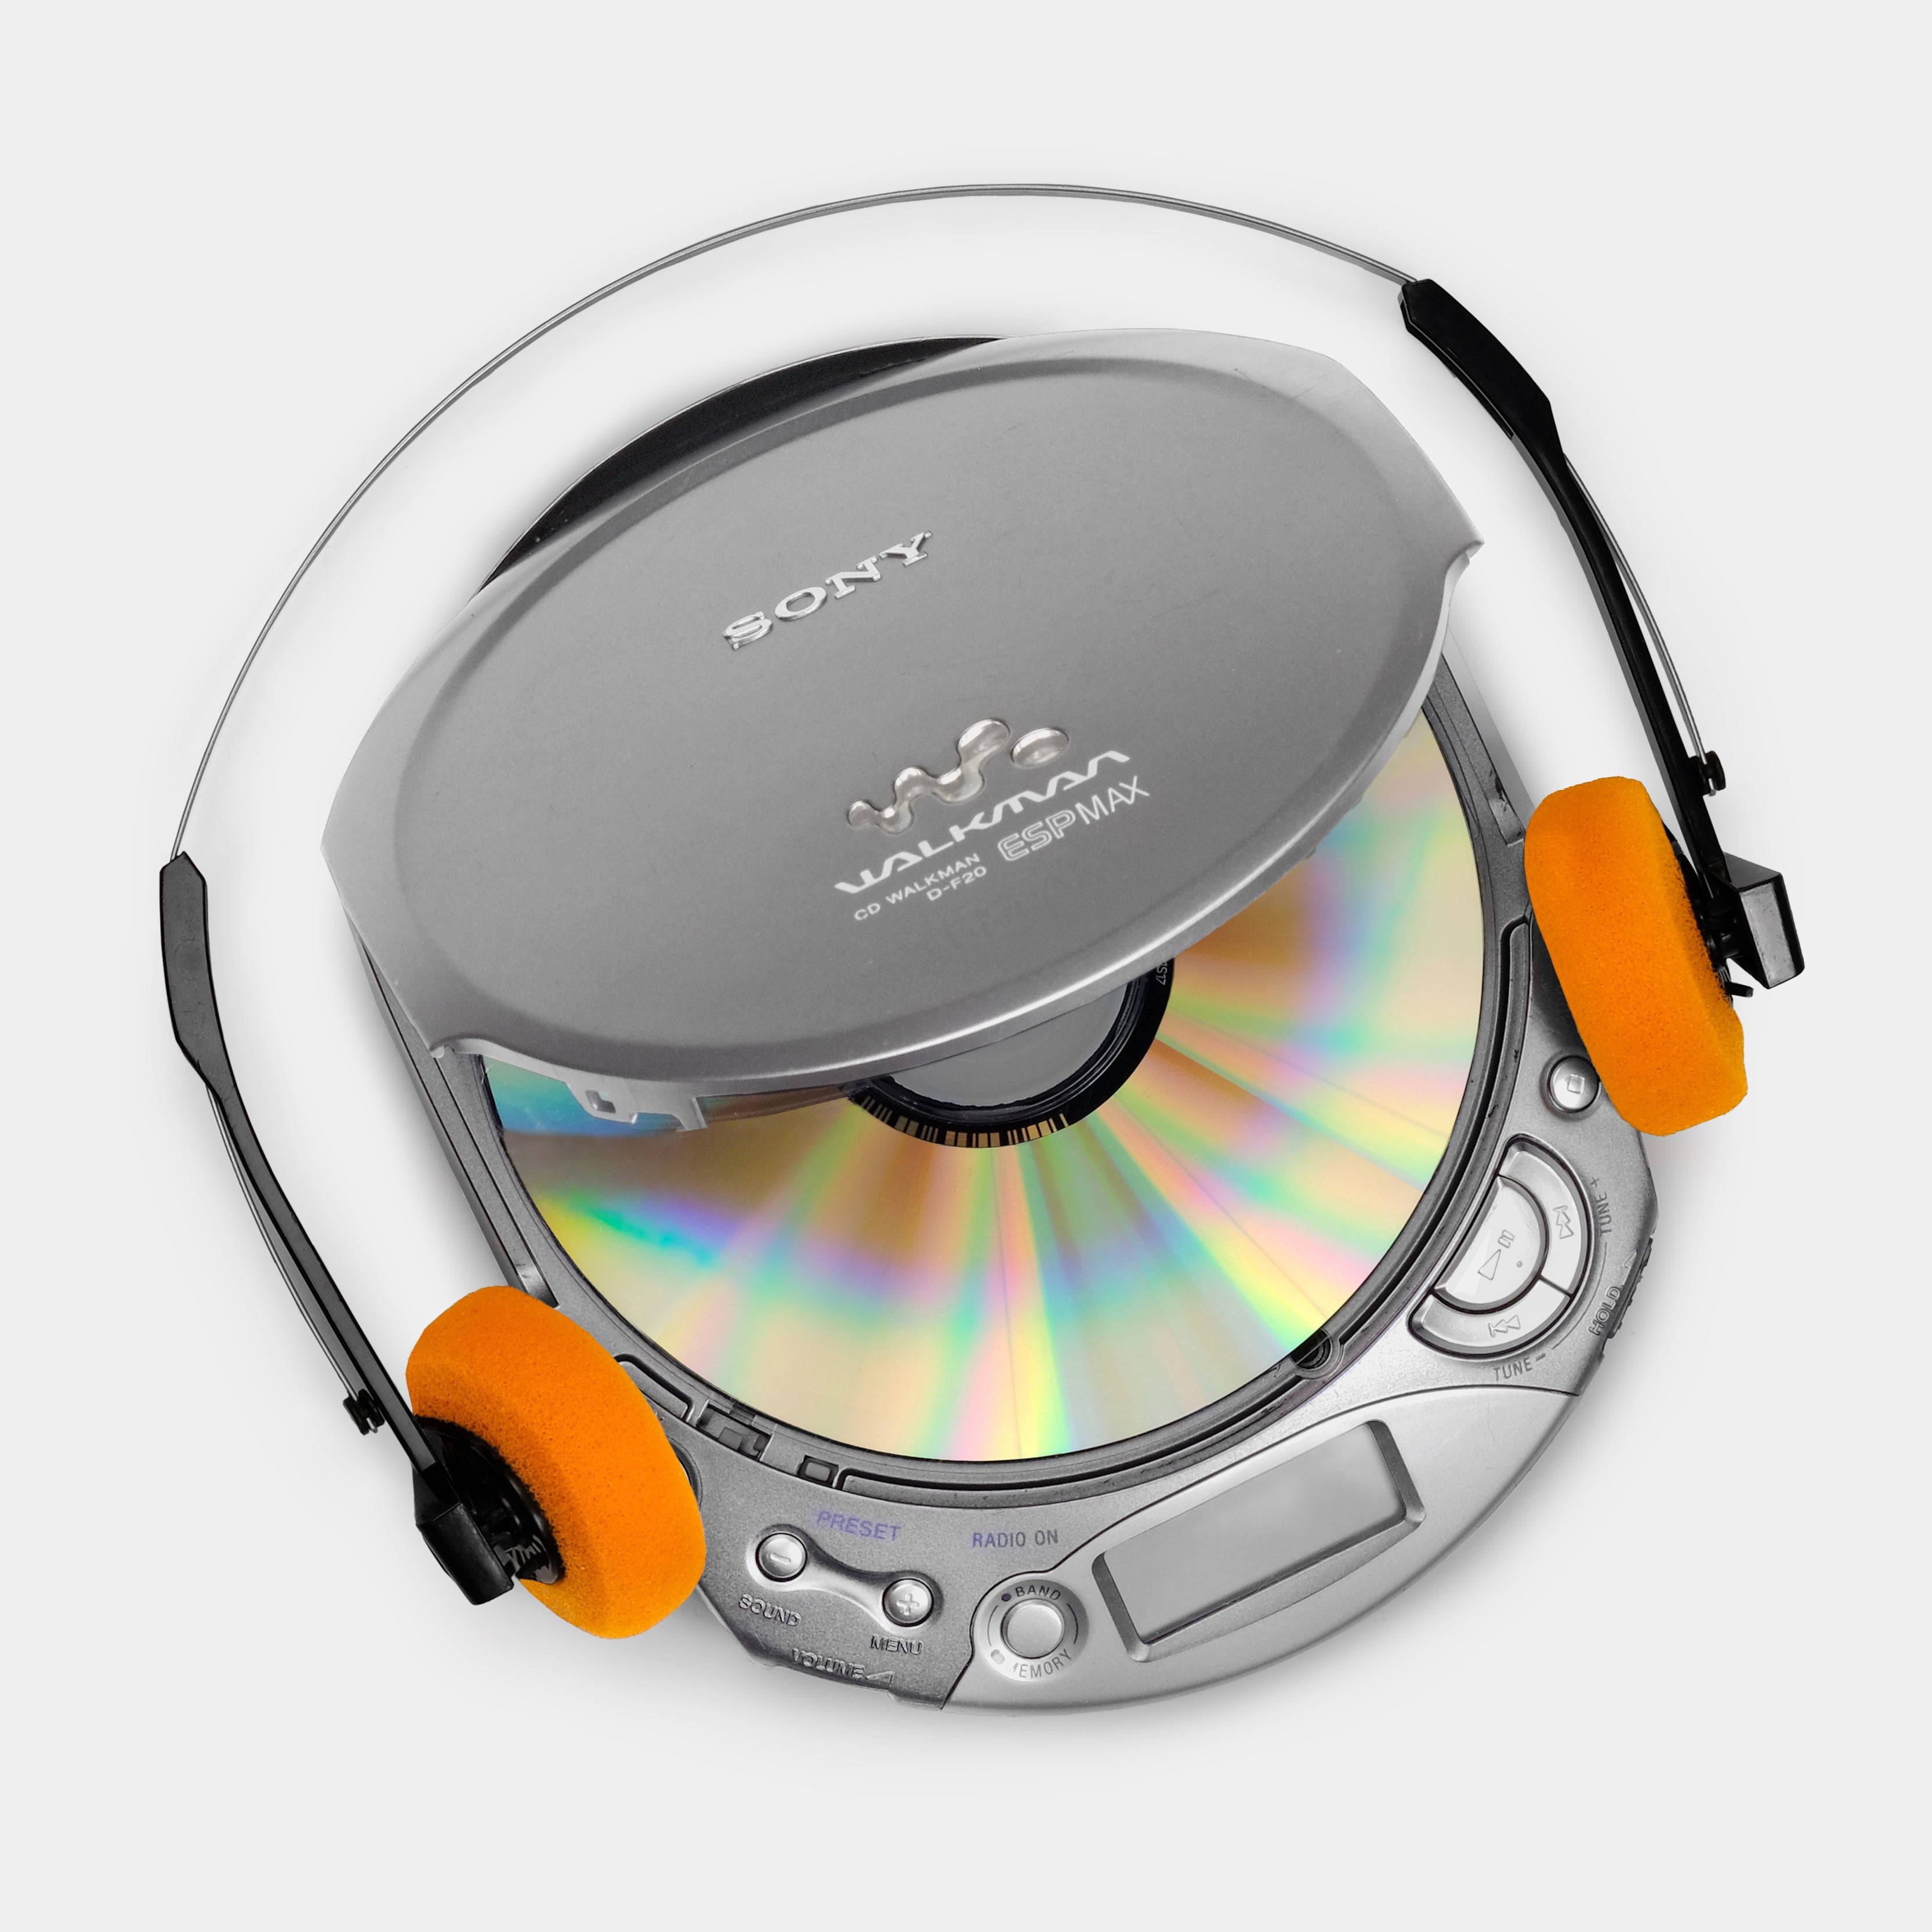 Sony Walkman D-F20 Portable CD Player